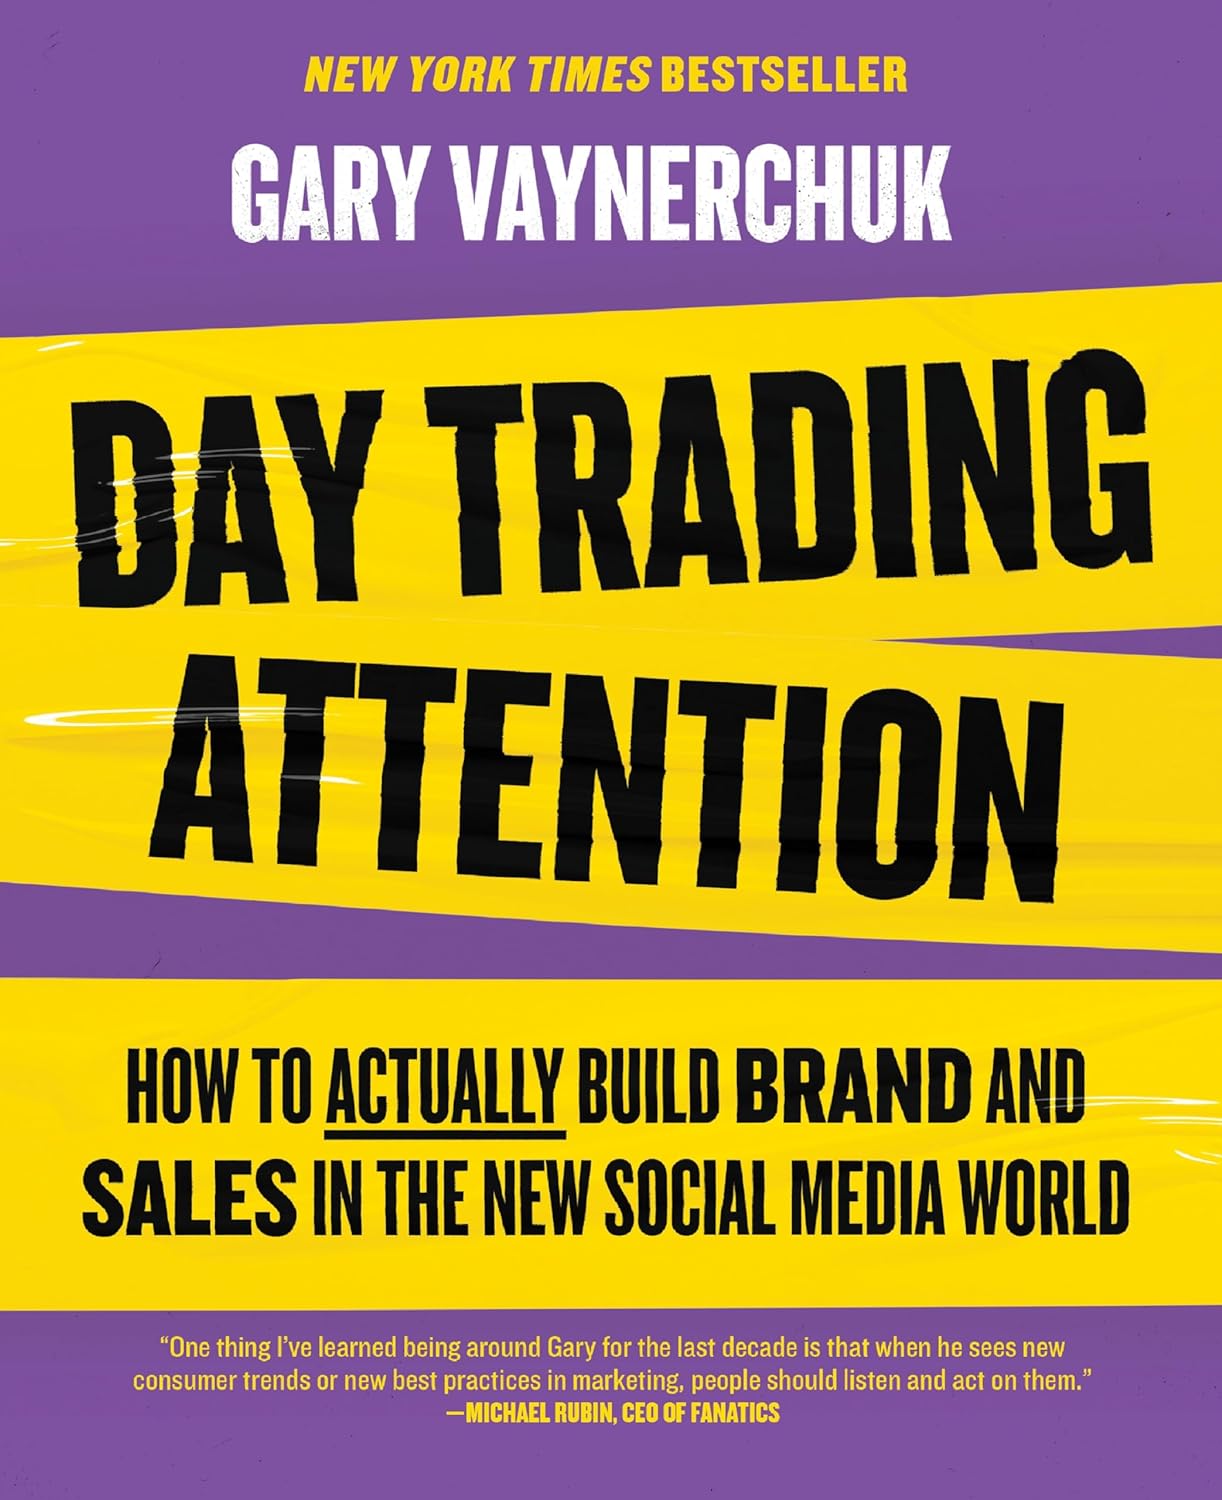 Day Trading Attention by Gary Vaynerchuk